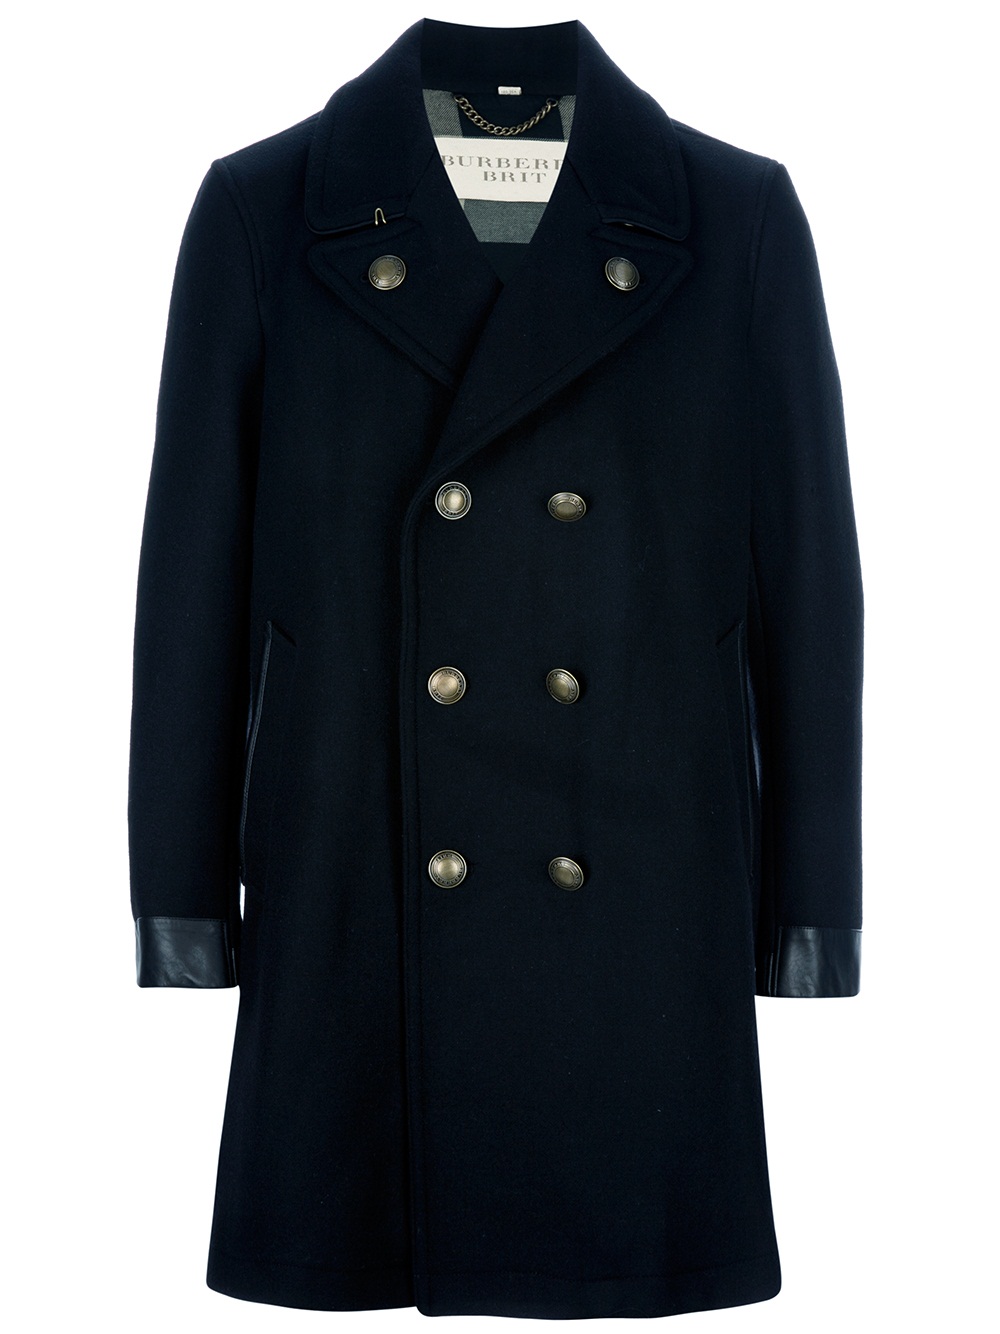 Lyst - Burberry Brit Wool Coat in Black for Men